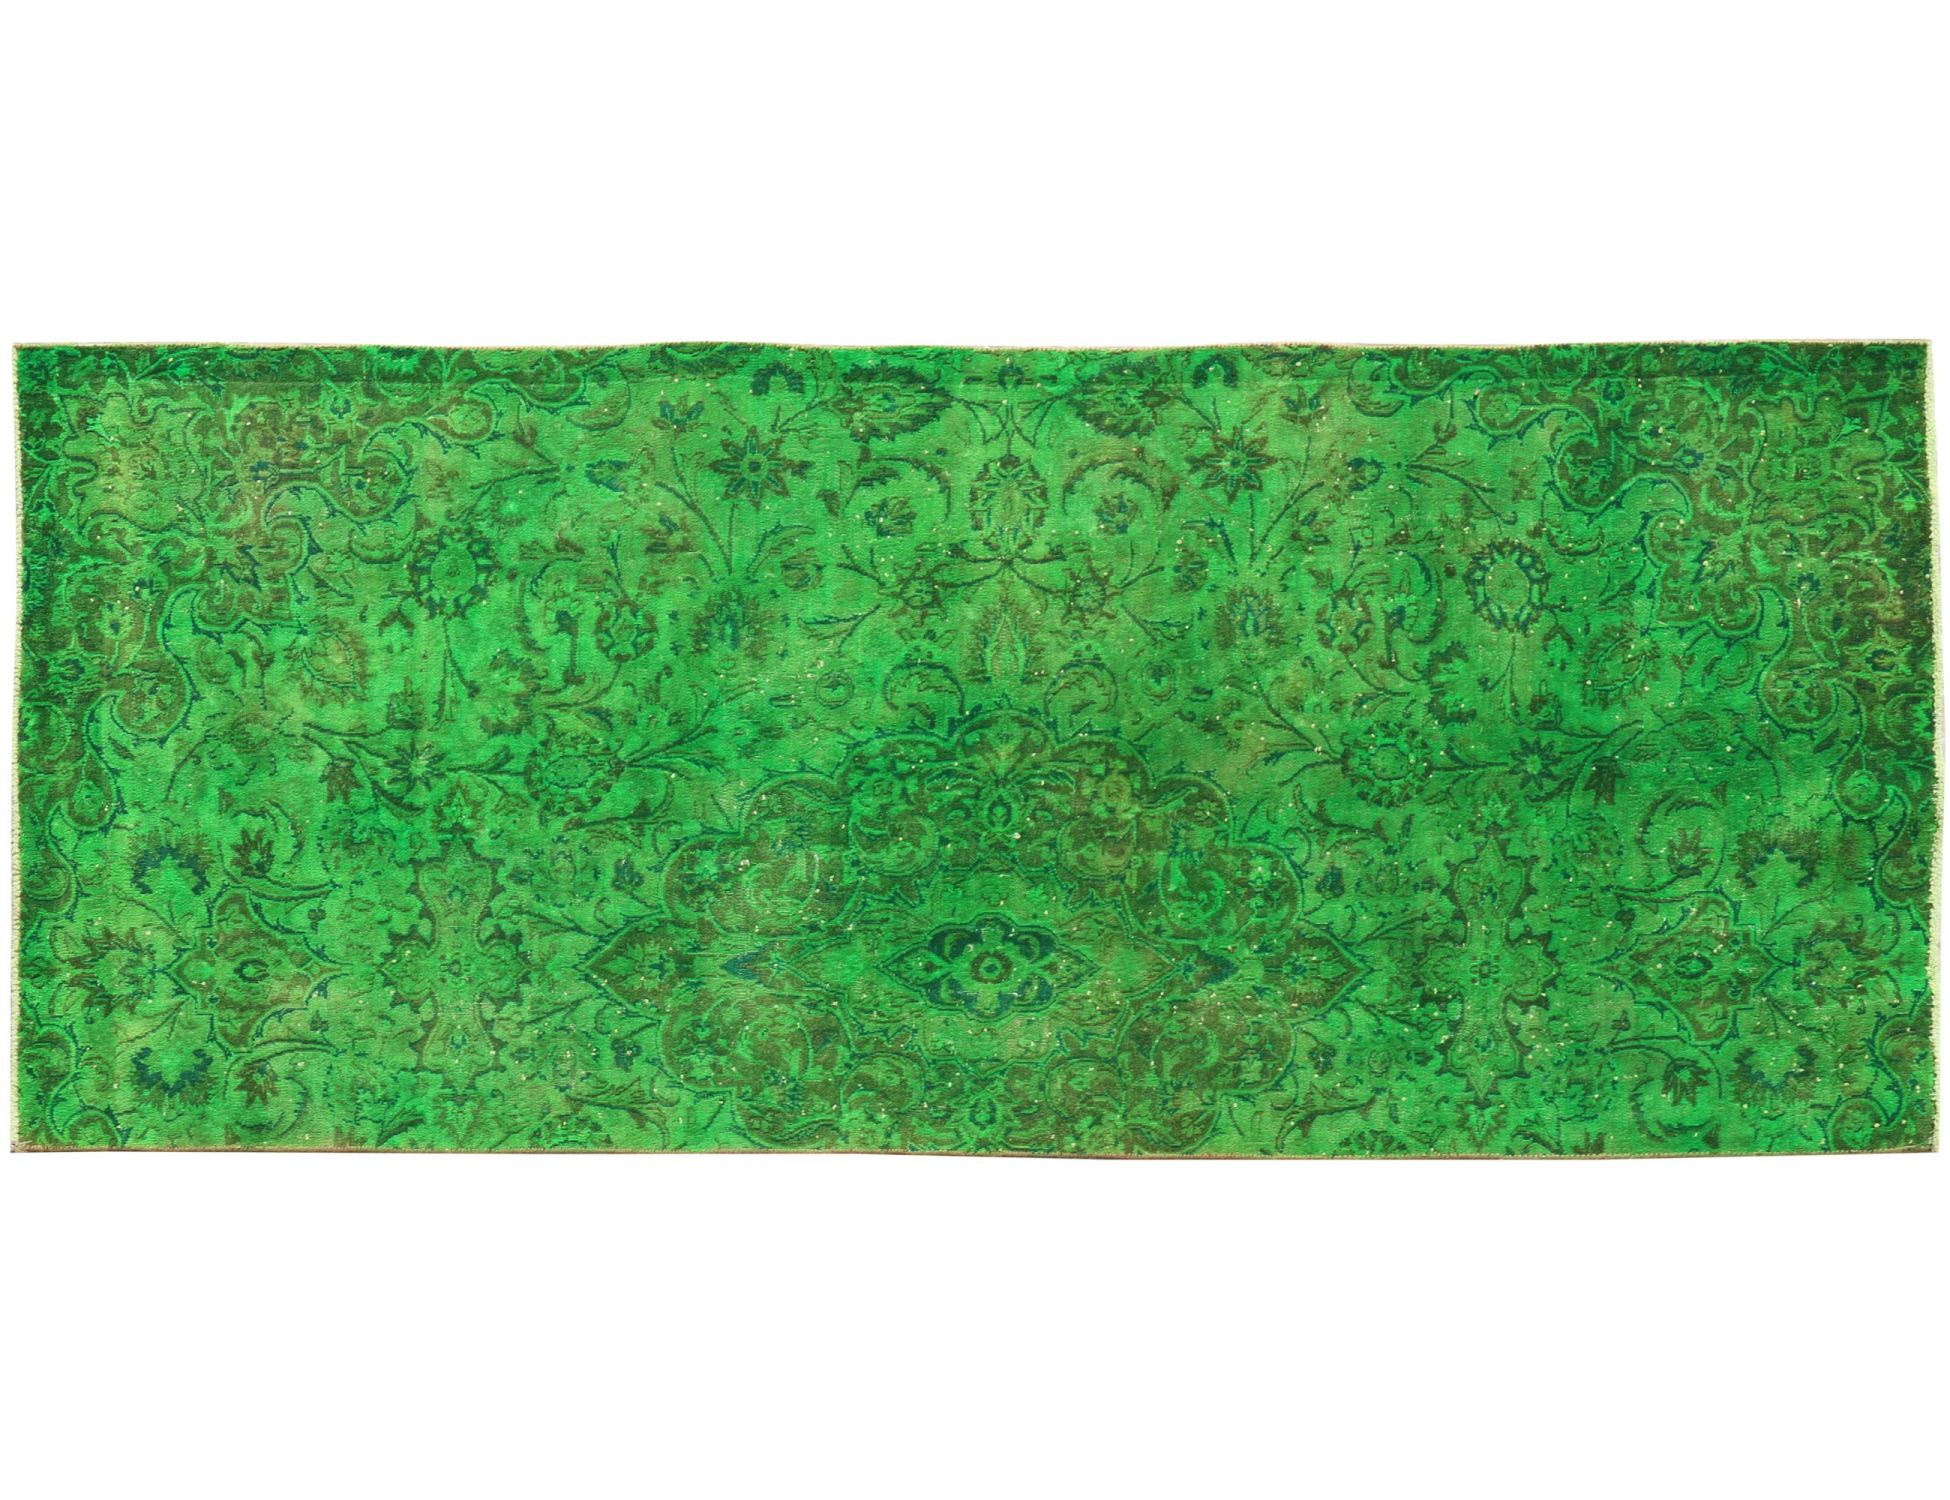 Vintage    Πράσινο <br/>283 x 133 cm